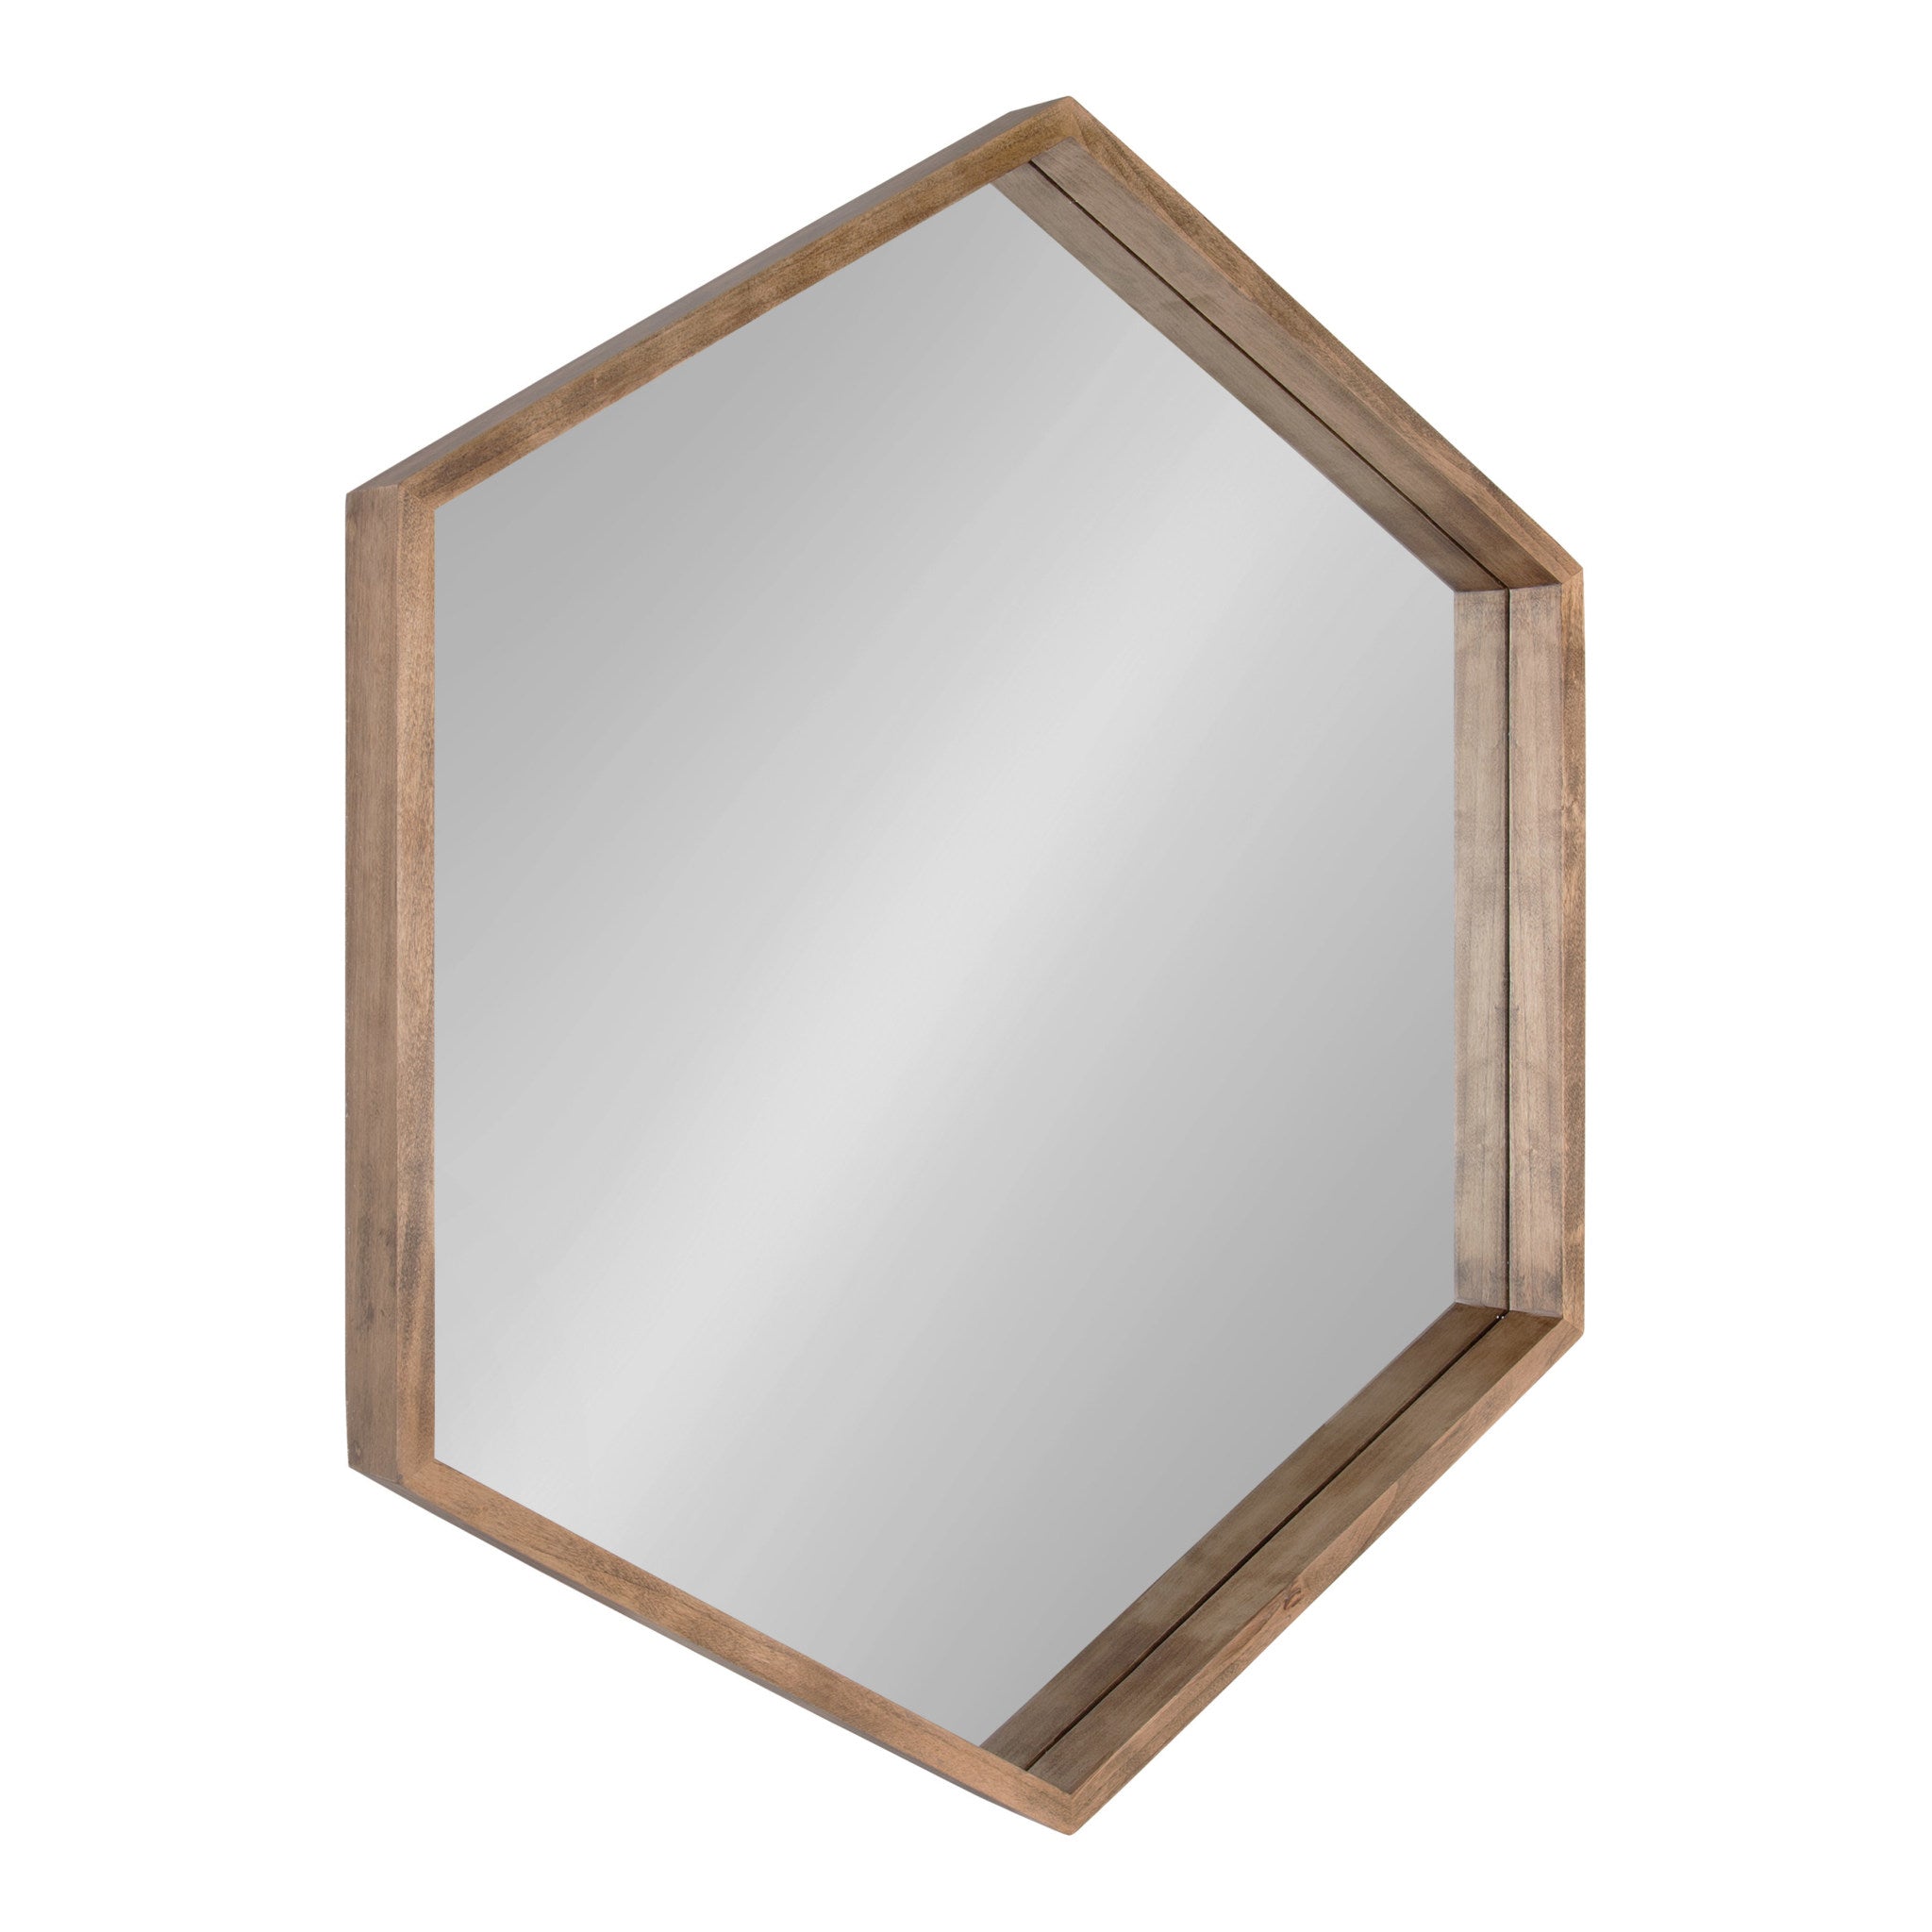 Hexagon Mirror, Rustic, Rustic Brown